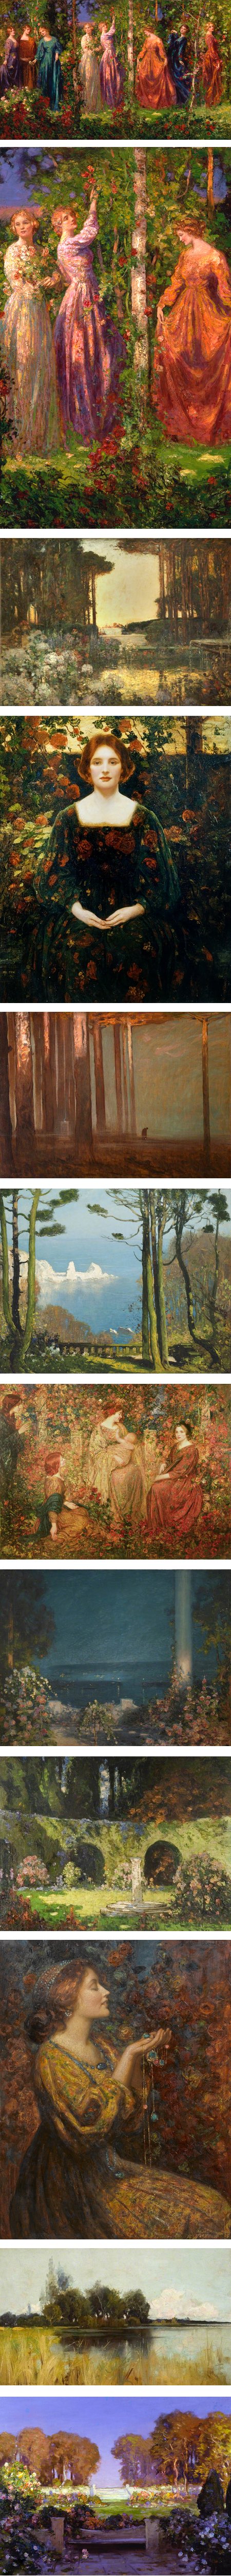 Thomas Edwin Mostyn, 19th and 20th century paintings, idyllic gardens